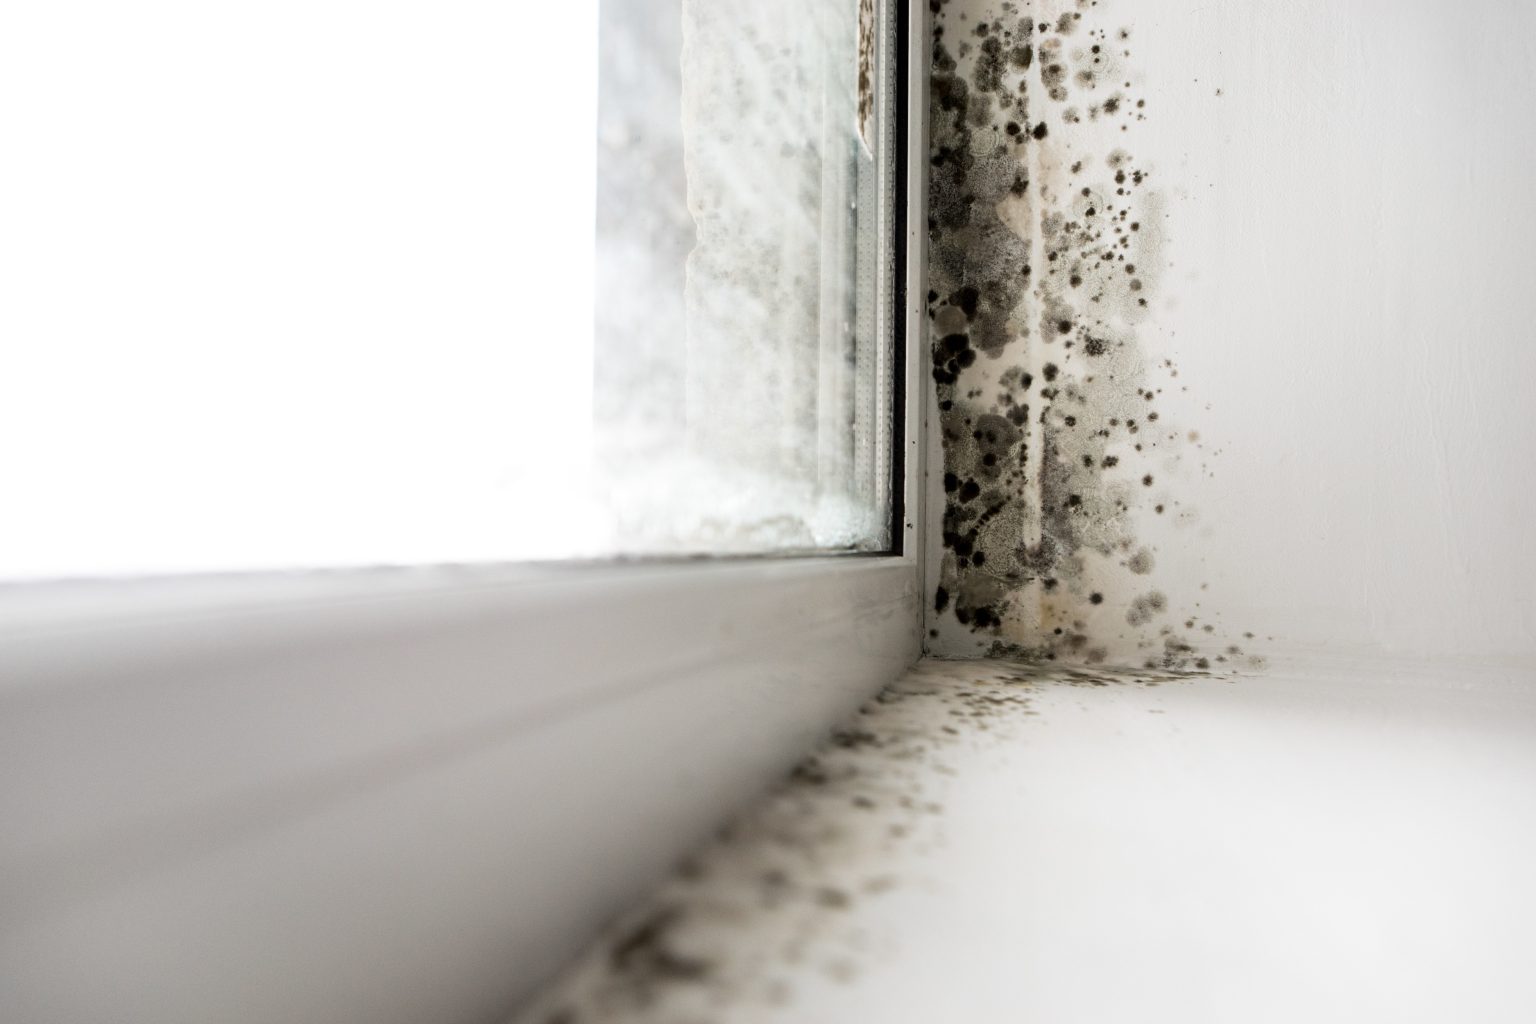 Mold Illness and CIRS - mold growing near window